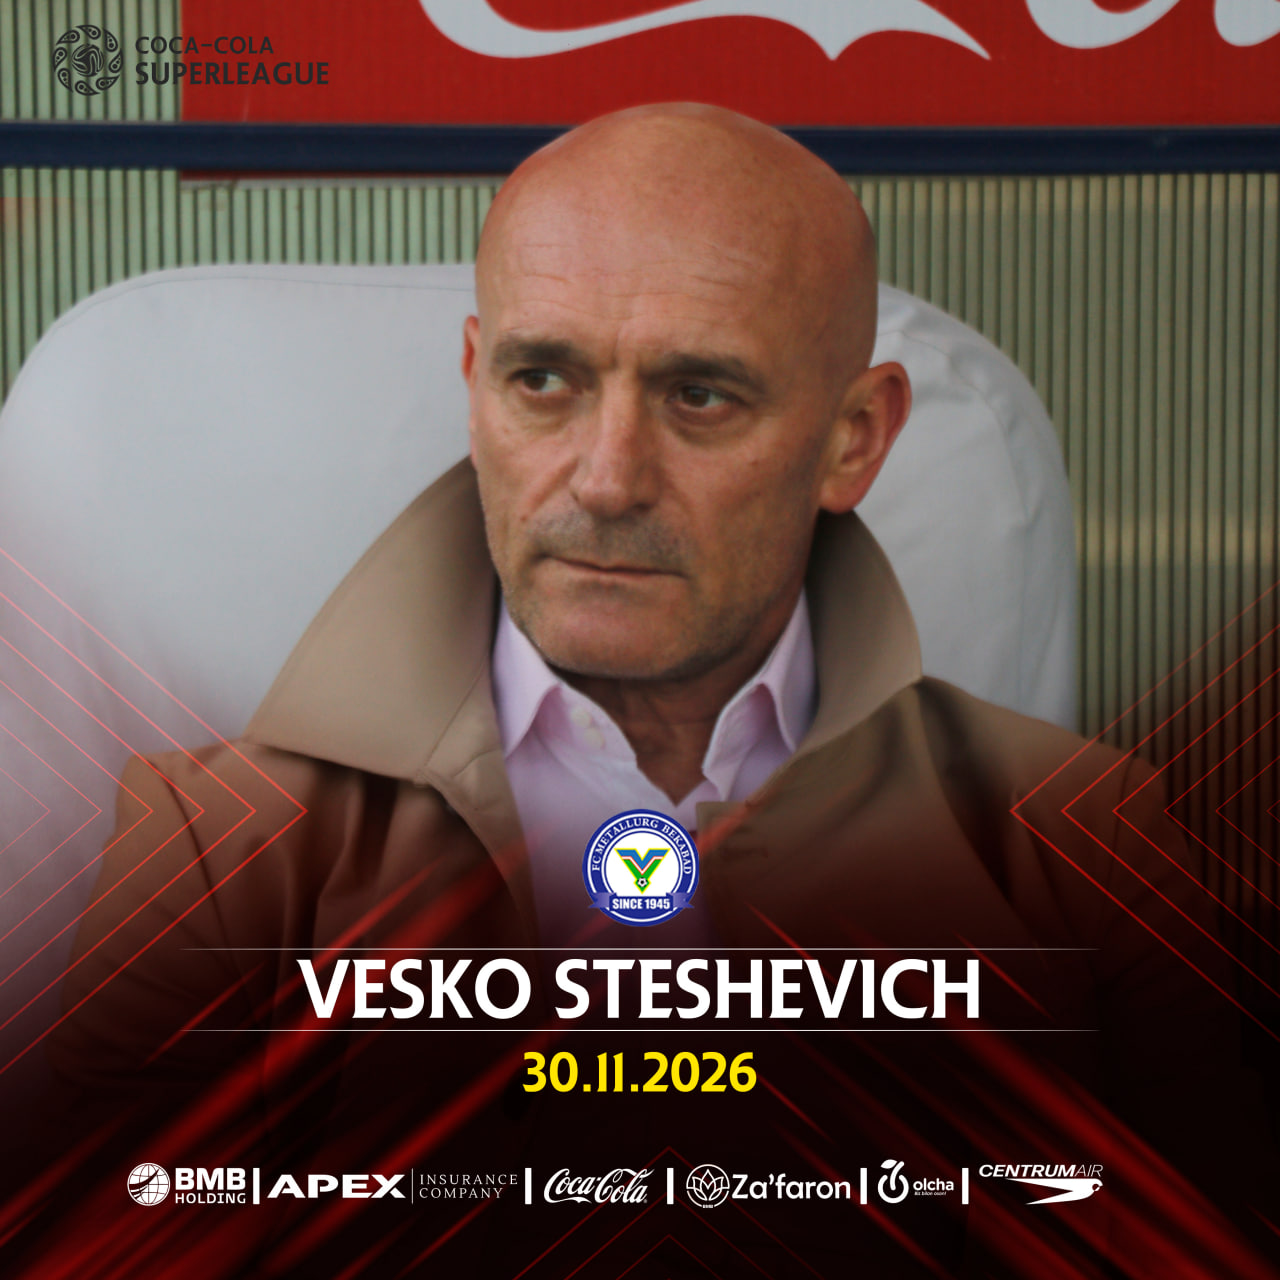 Steshevich